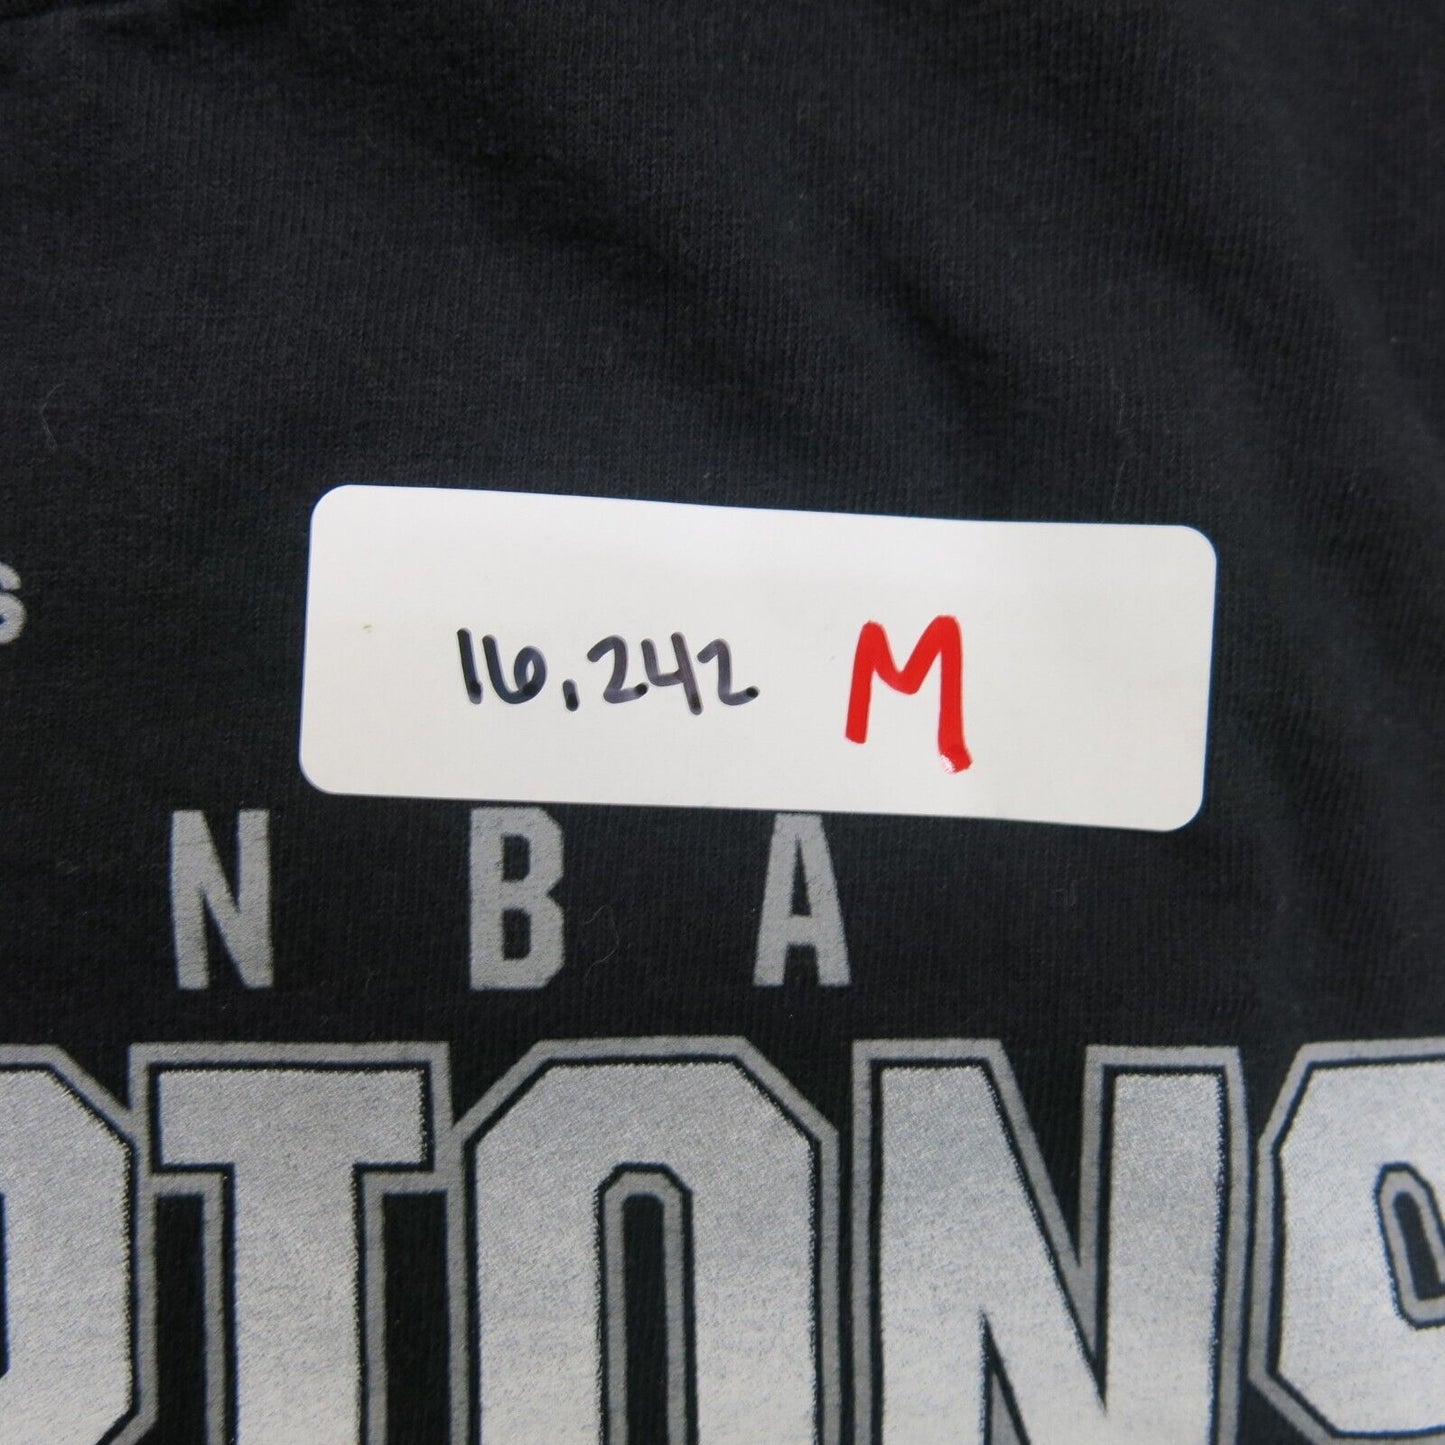 Adidas Men's Champion SPURS NBA Graphics T Shirt Short Sleeves Black Size S